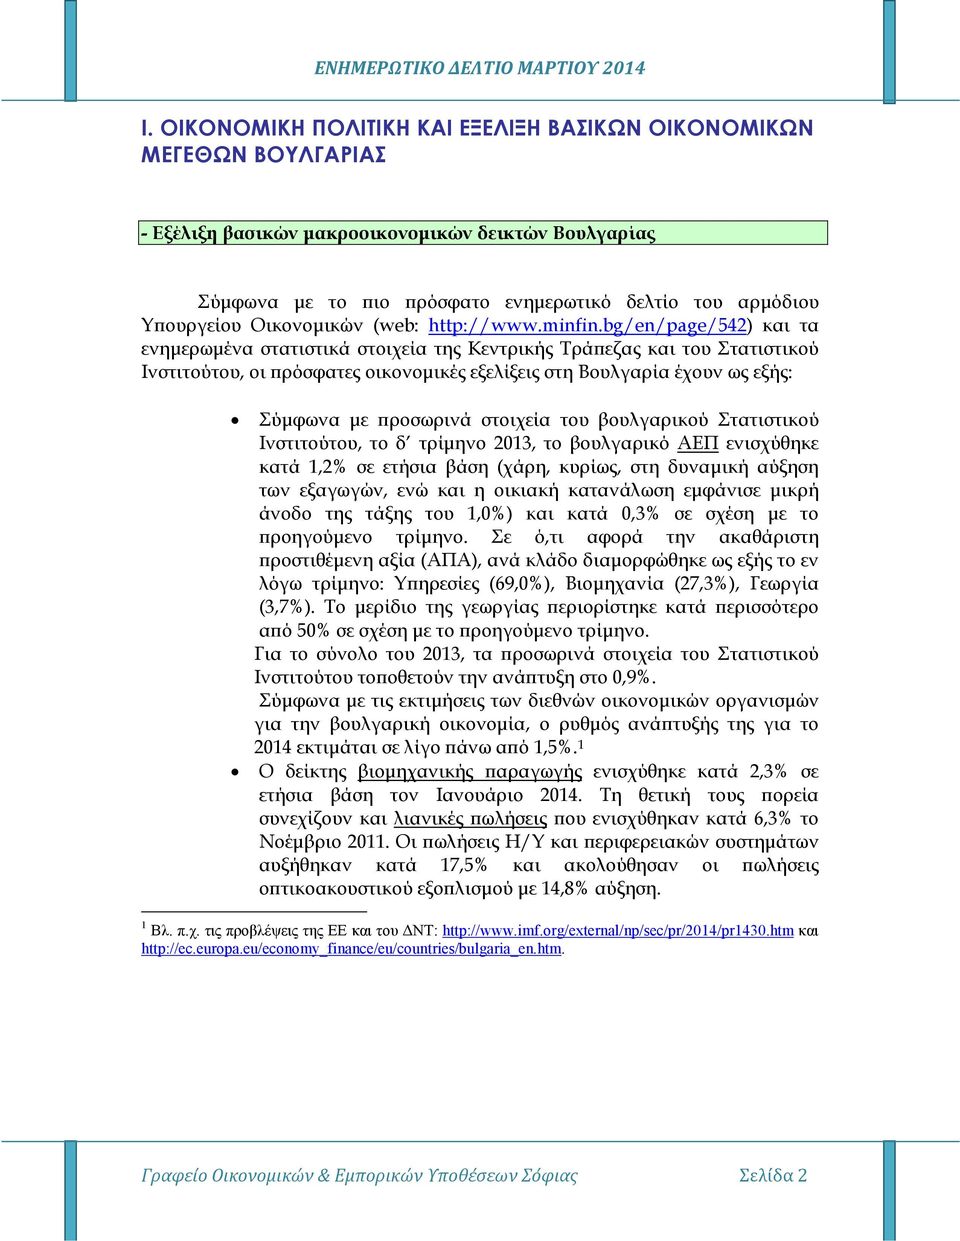 bg/en/page/542) και τα ενηµερωµένα στατιστικά στοιχεία της Κεντρικής Τρά εζας και του Στατιστικού Ινστιτούτου, οι ρόσφατες οικονοµικές εξελίξεις στη Βουλγαρία έχουν ως εξής: Σύµφωνα µε ροσωρινά